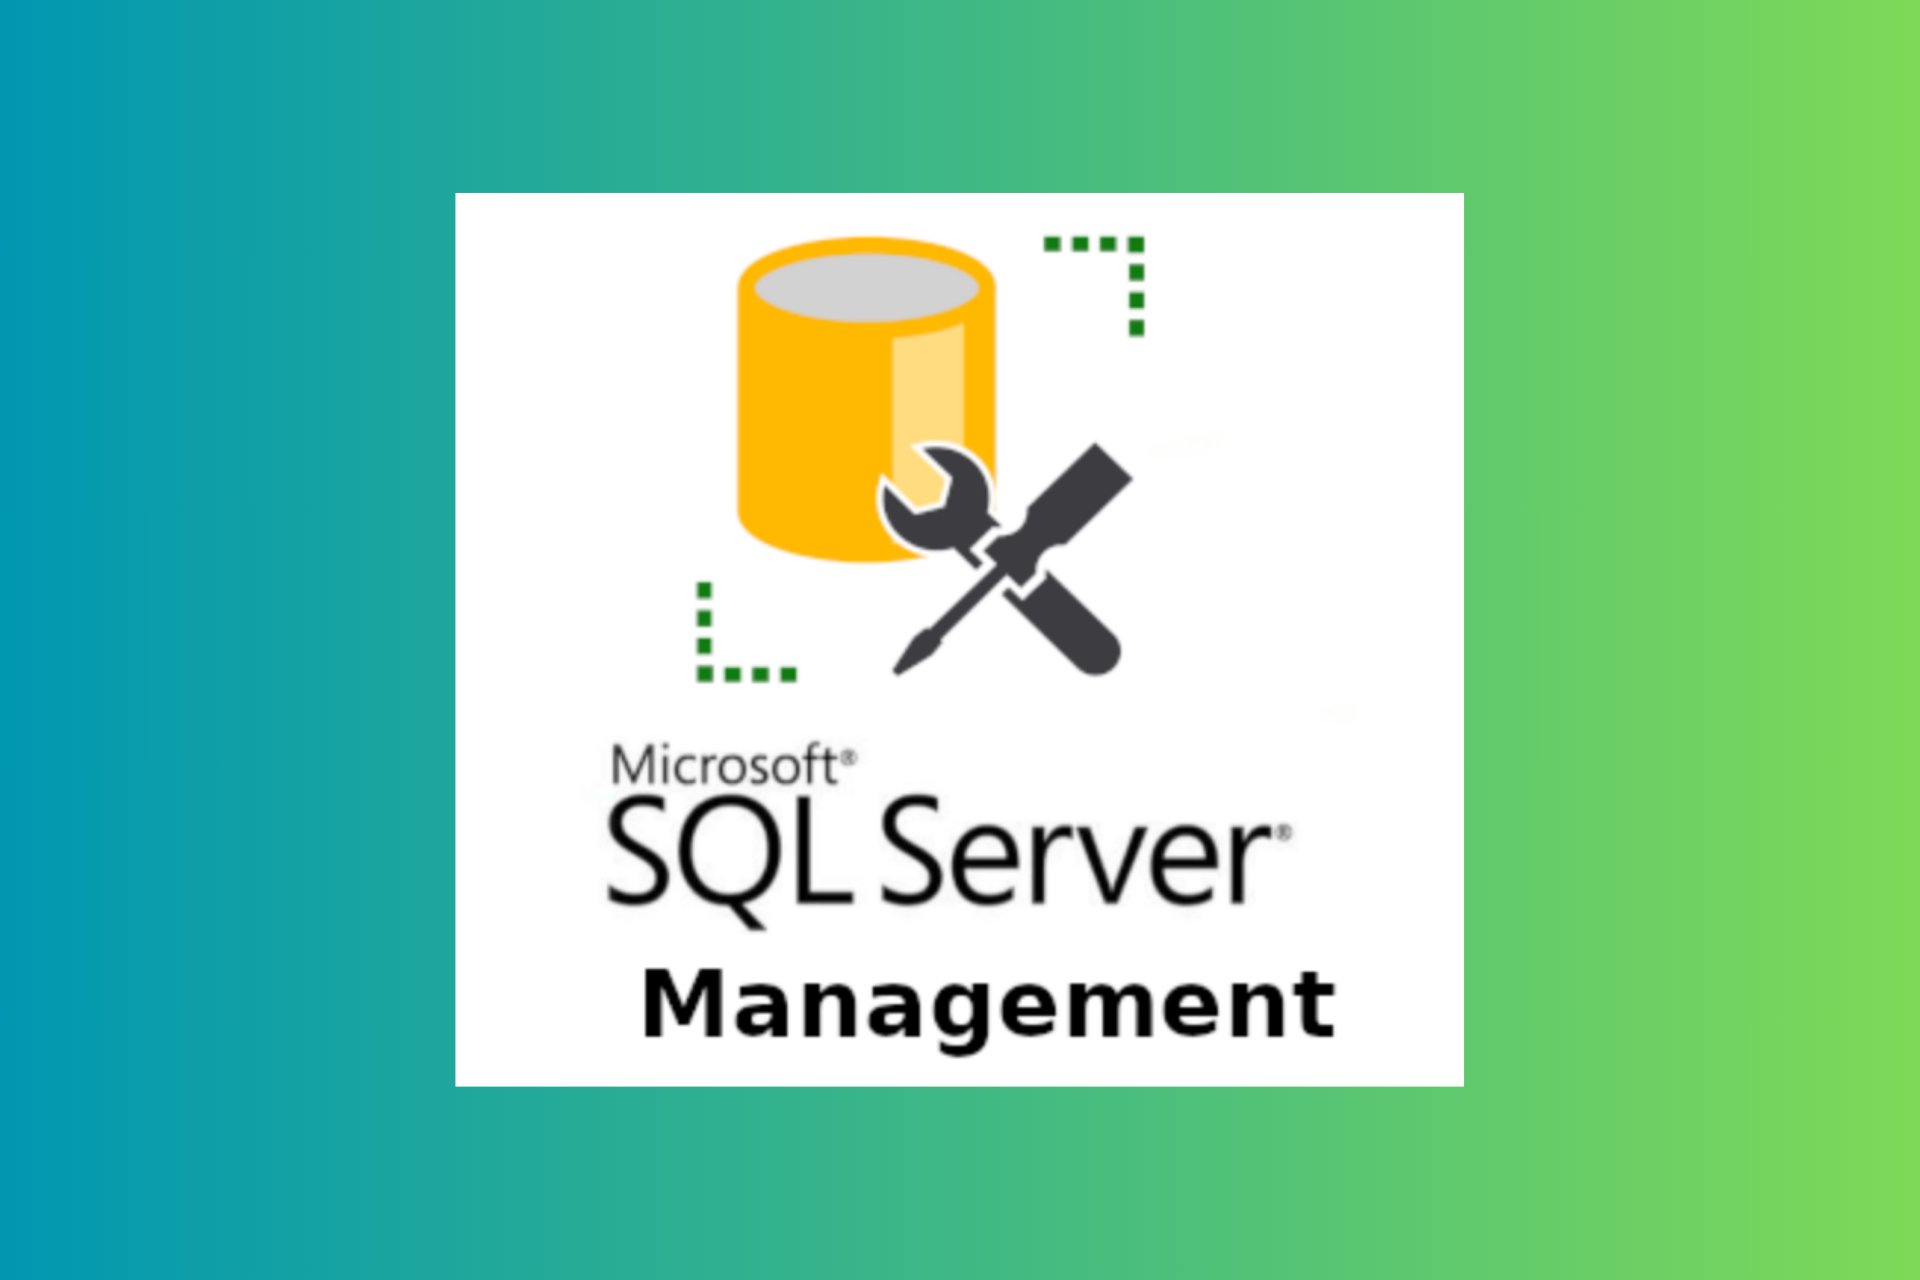 How to download Microsoft SQL Server Management Studio